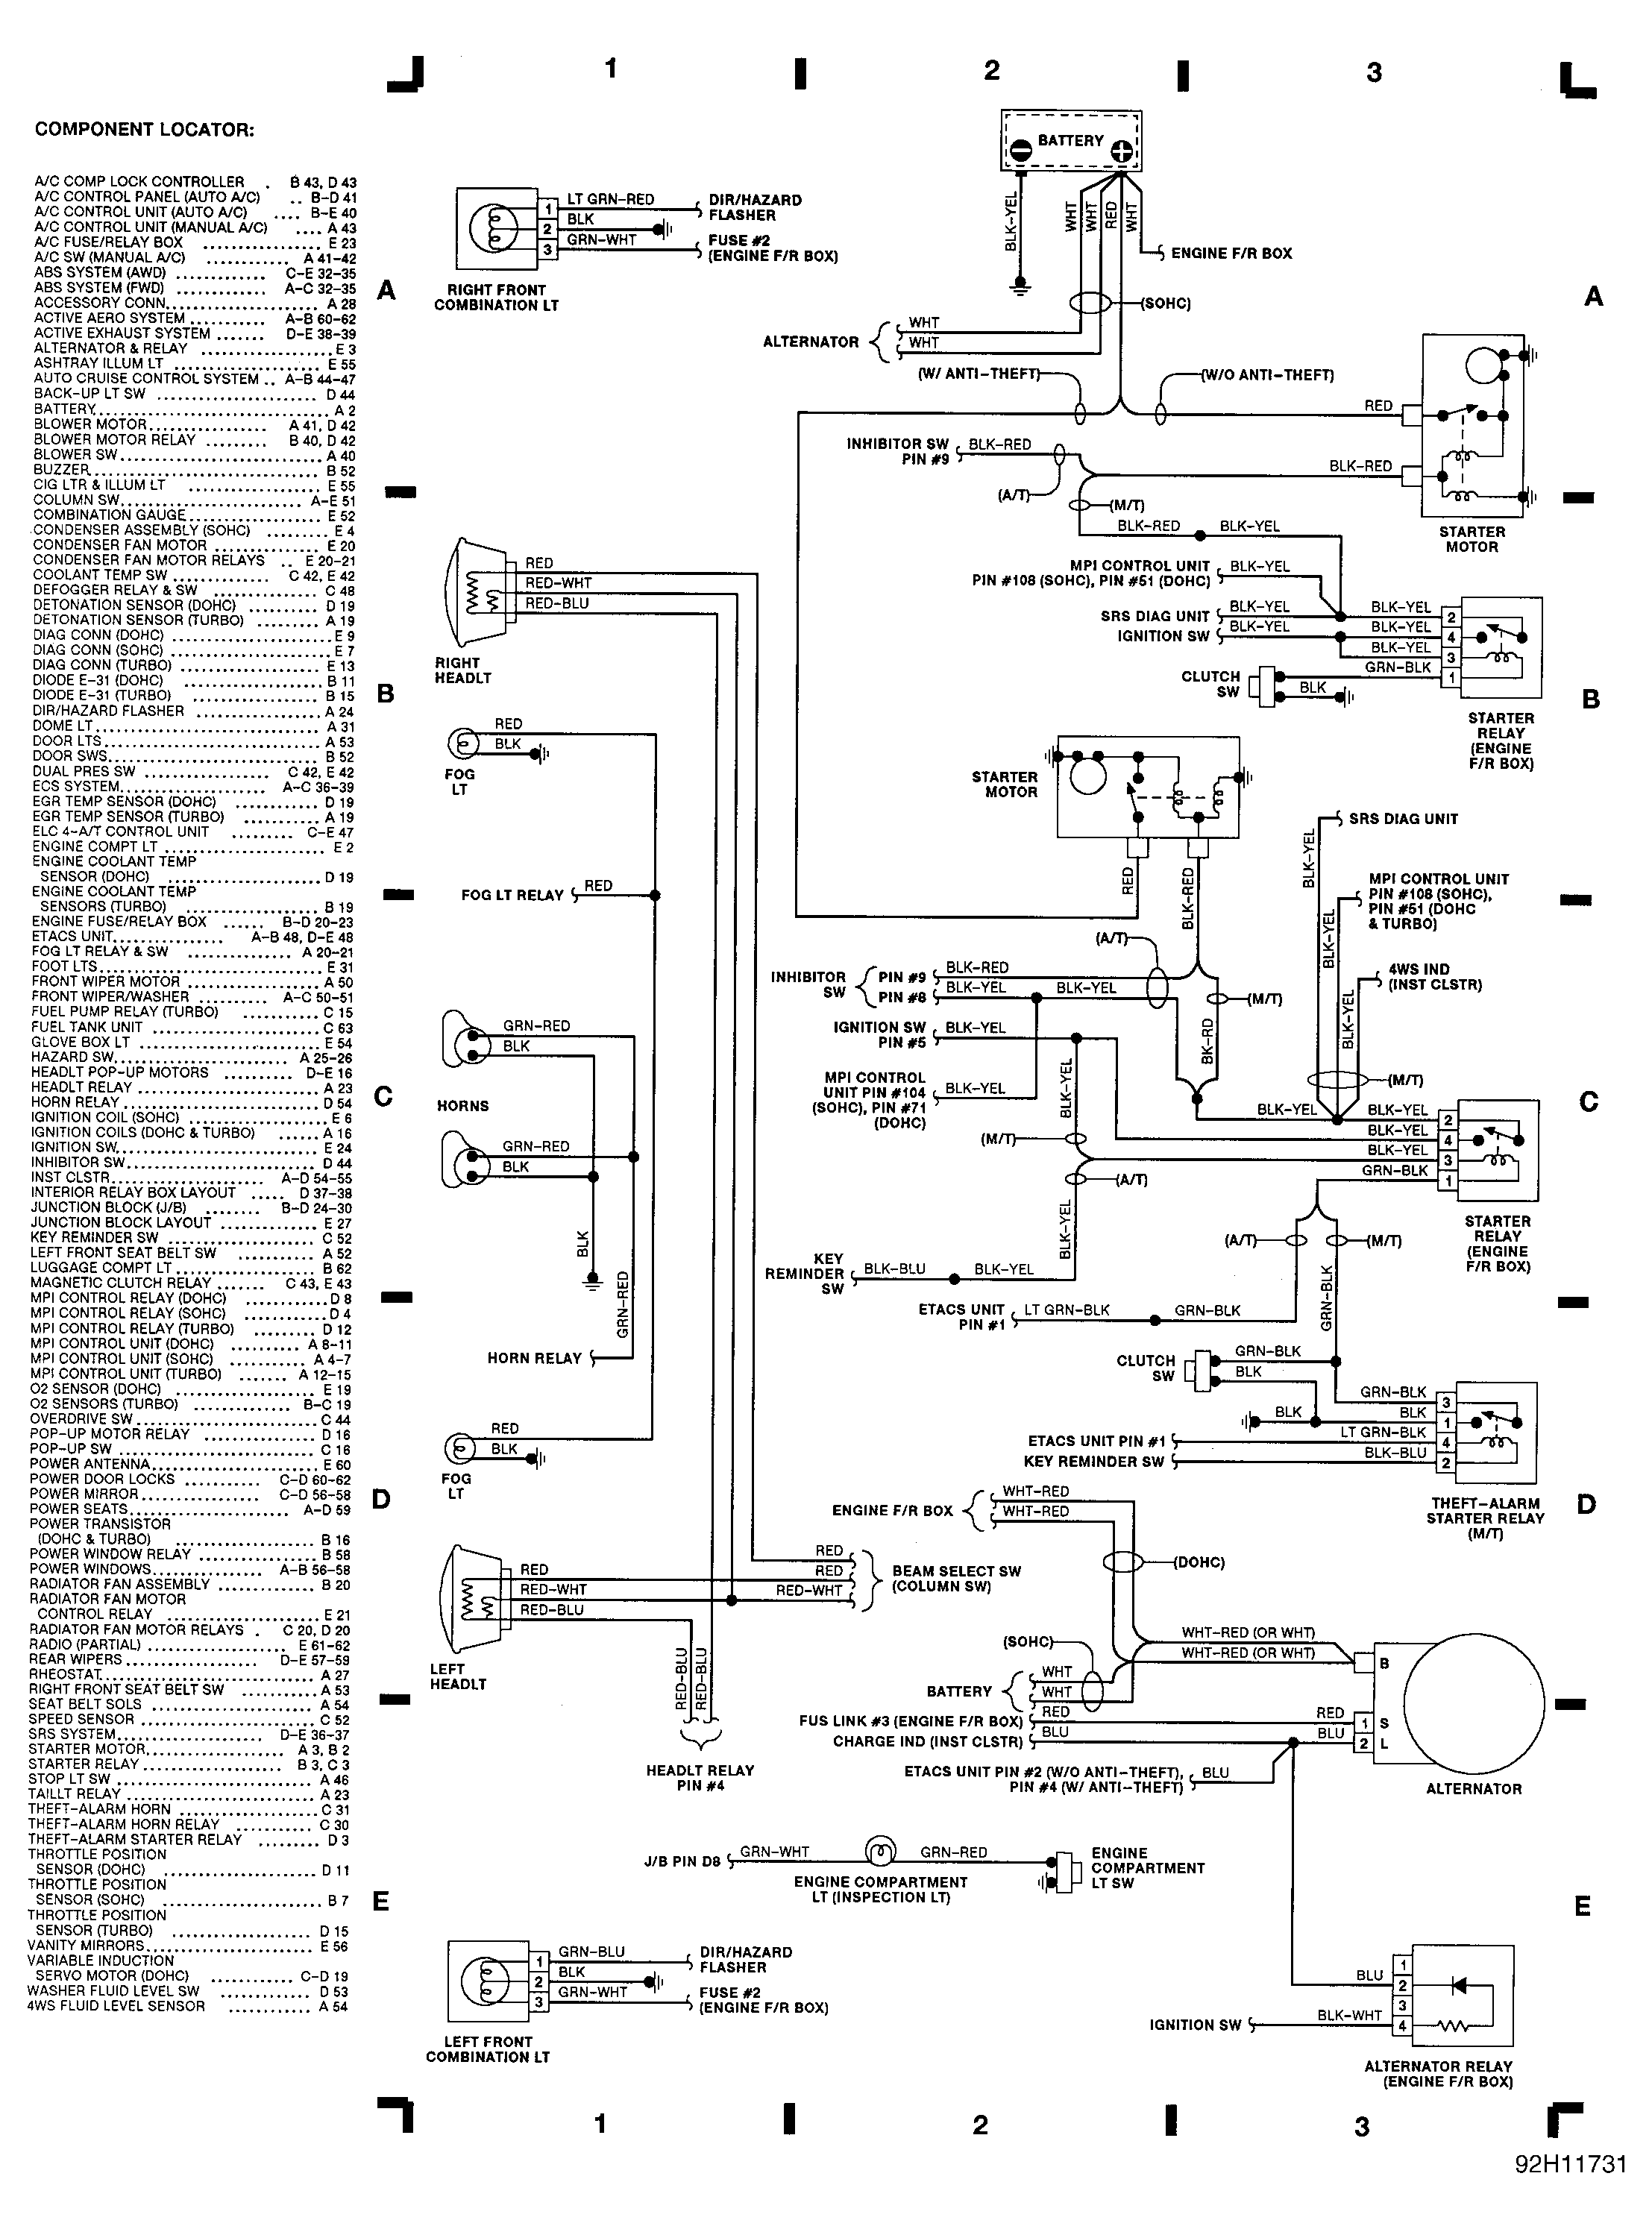 1999 mitsubishi mirage radio wiring diagram identification